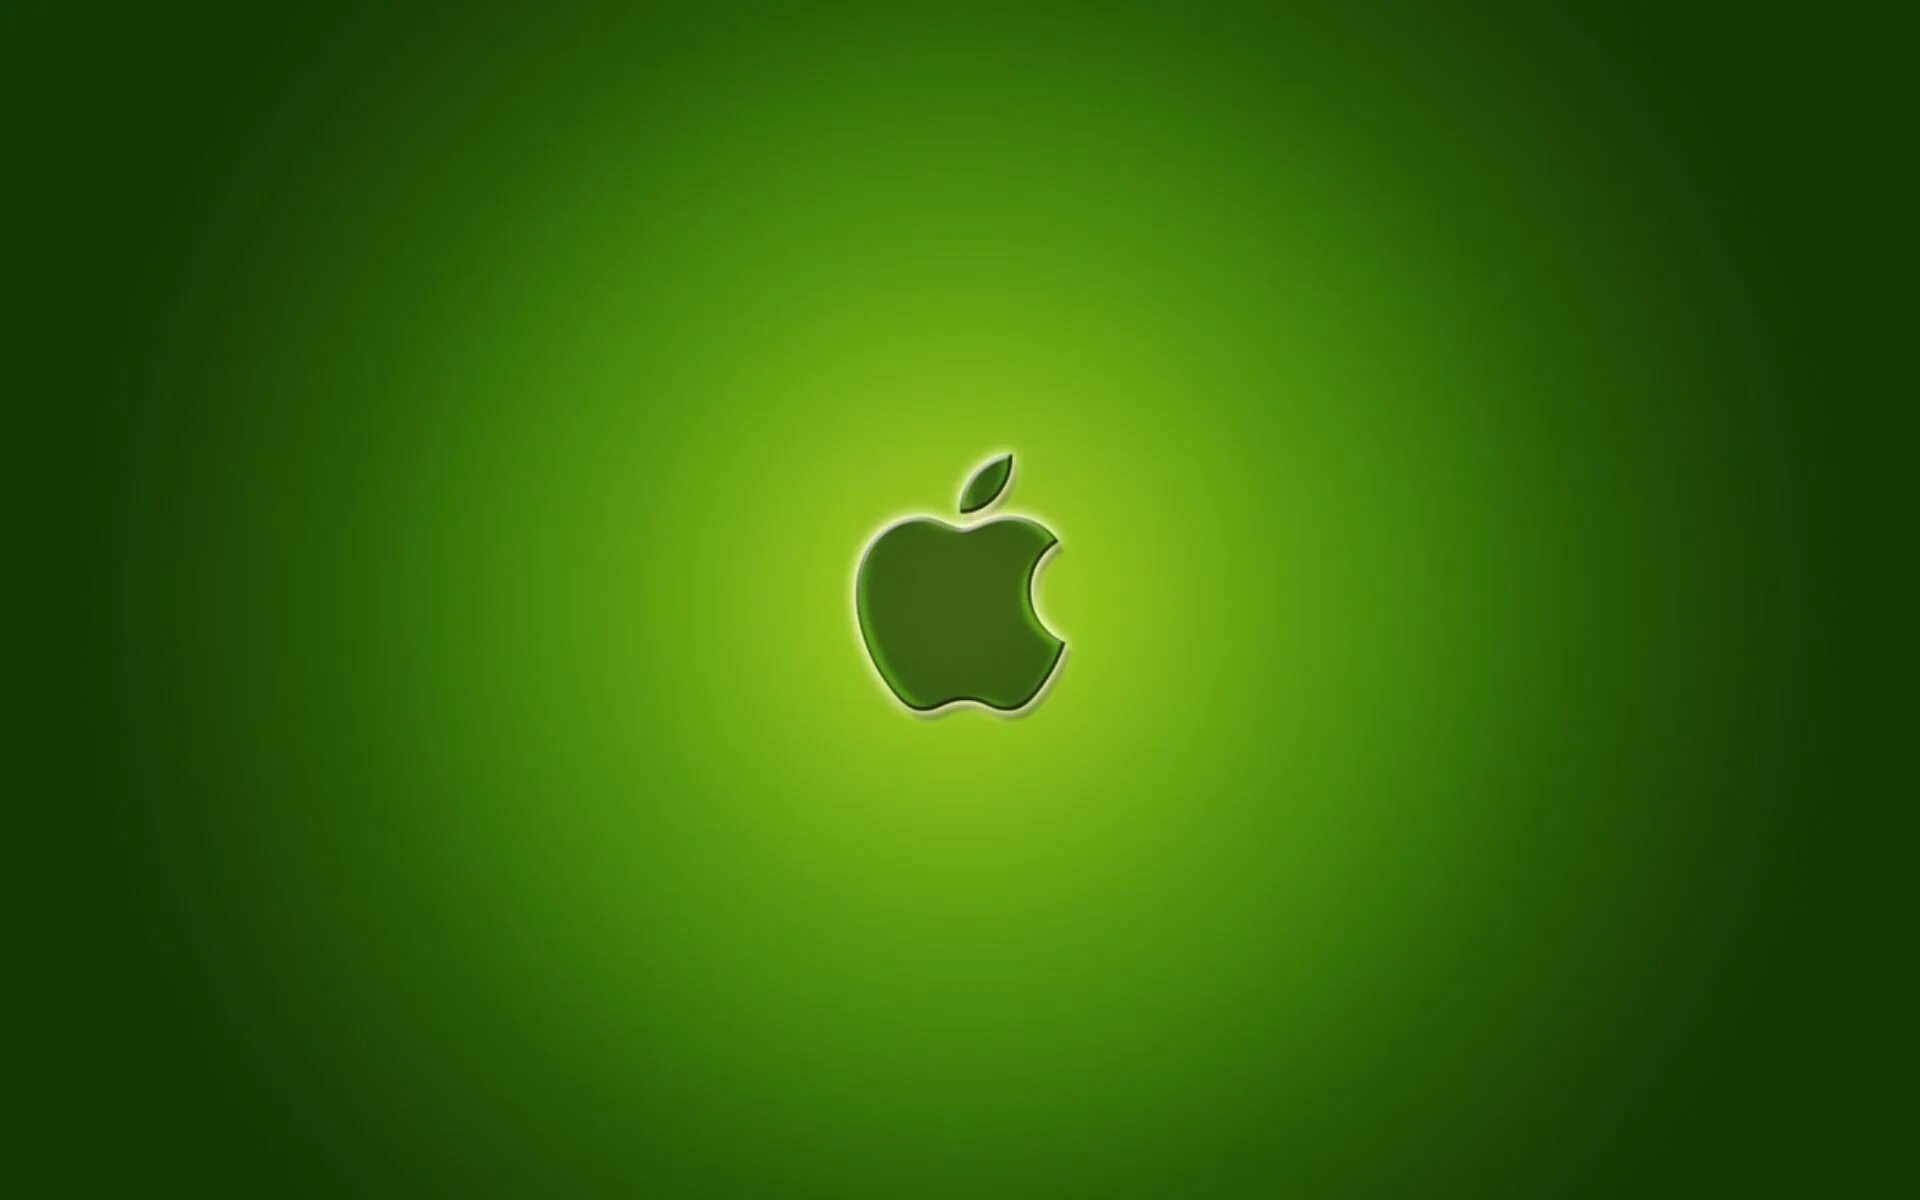 Обои на айфон яблоко. Эпл айфон. Зеленые обои. Фон Apple. Яблоко айфон.